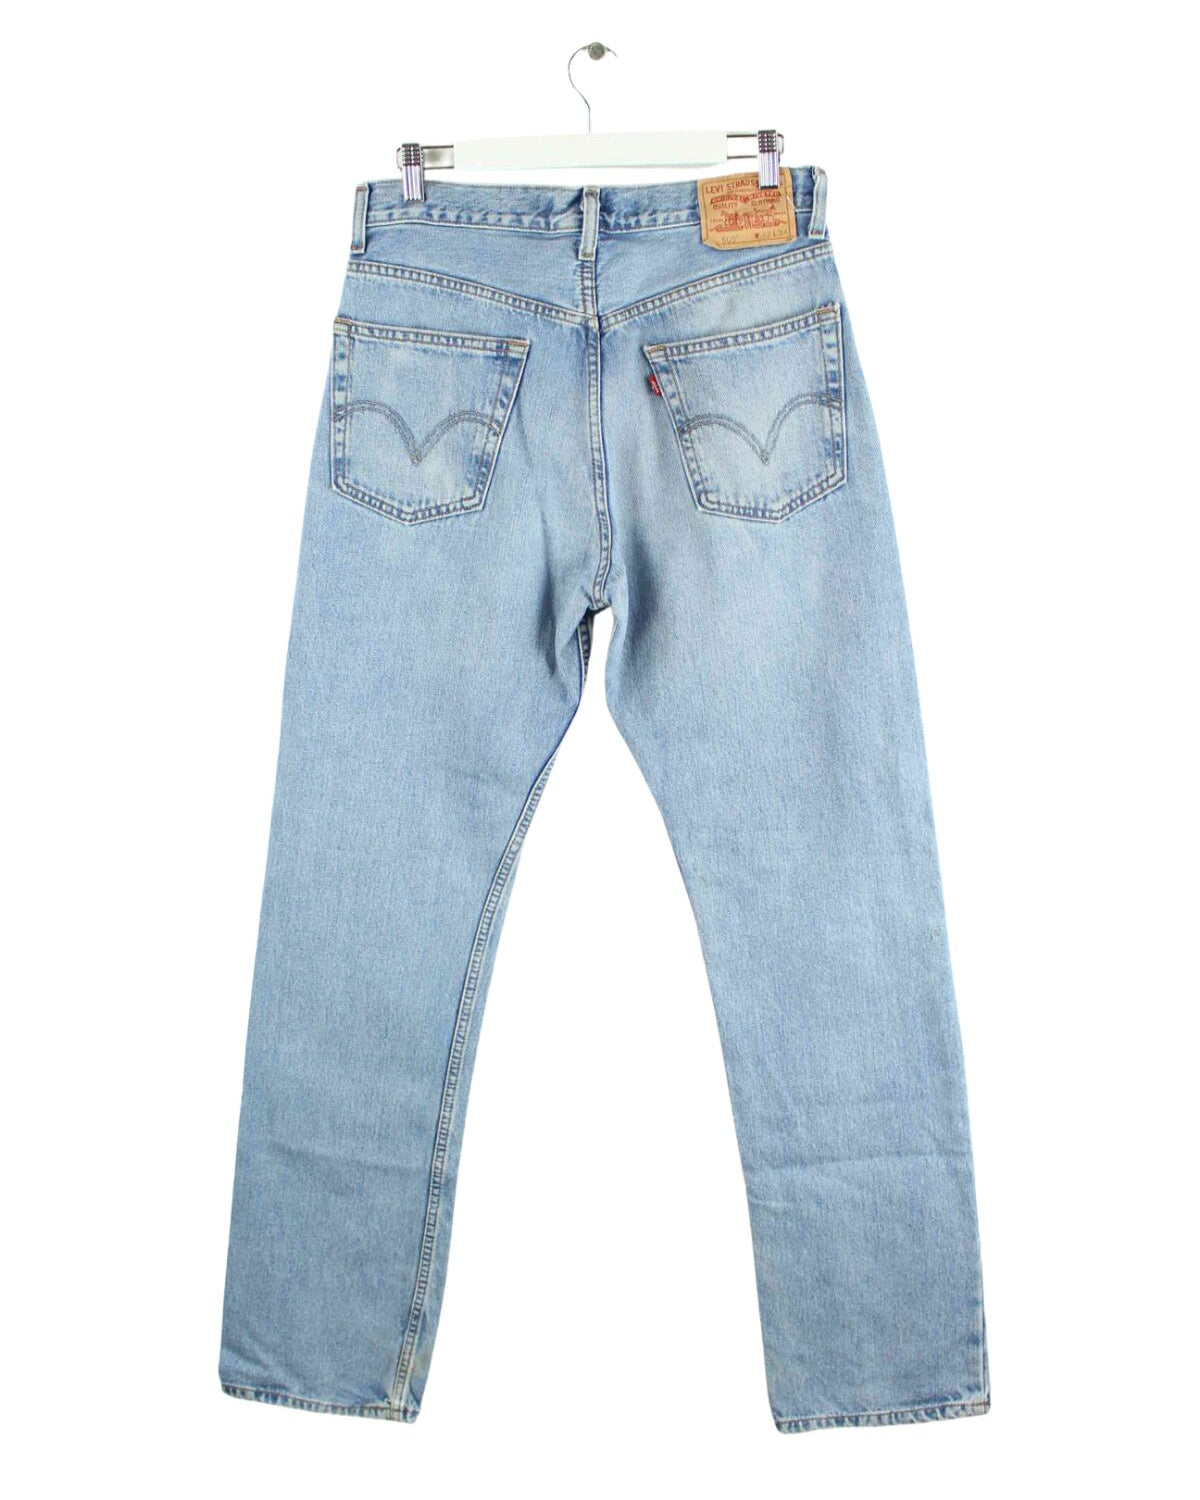 Levi's 550 Regular Fit Jeans Blau W32 L34 (back image)